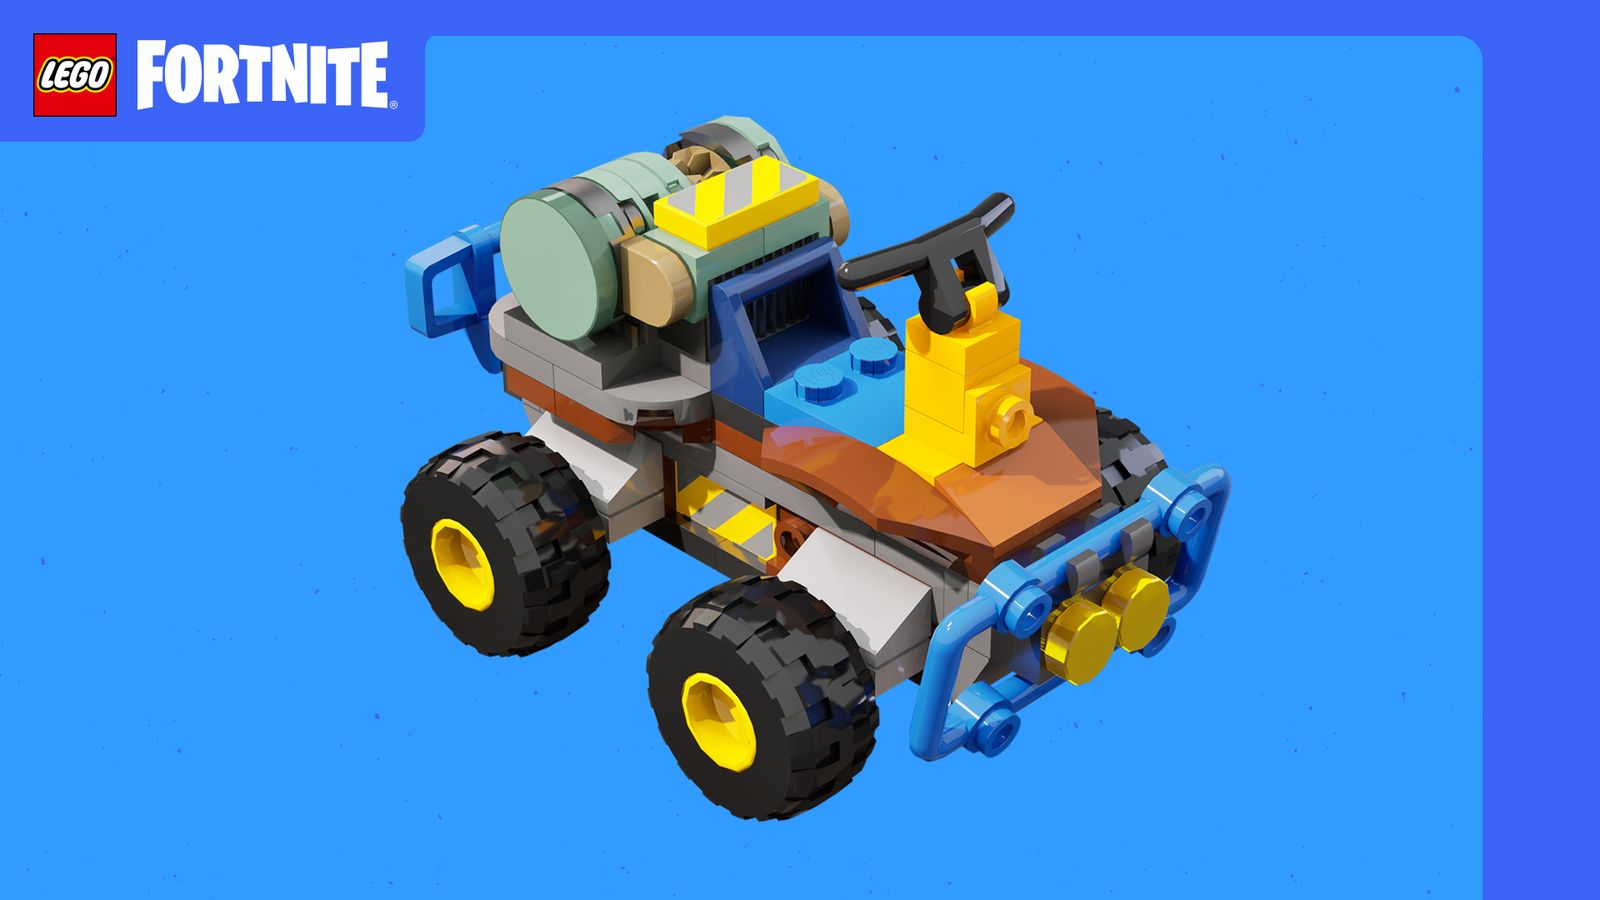 Lego Fortnite car on blue background